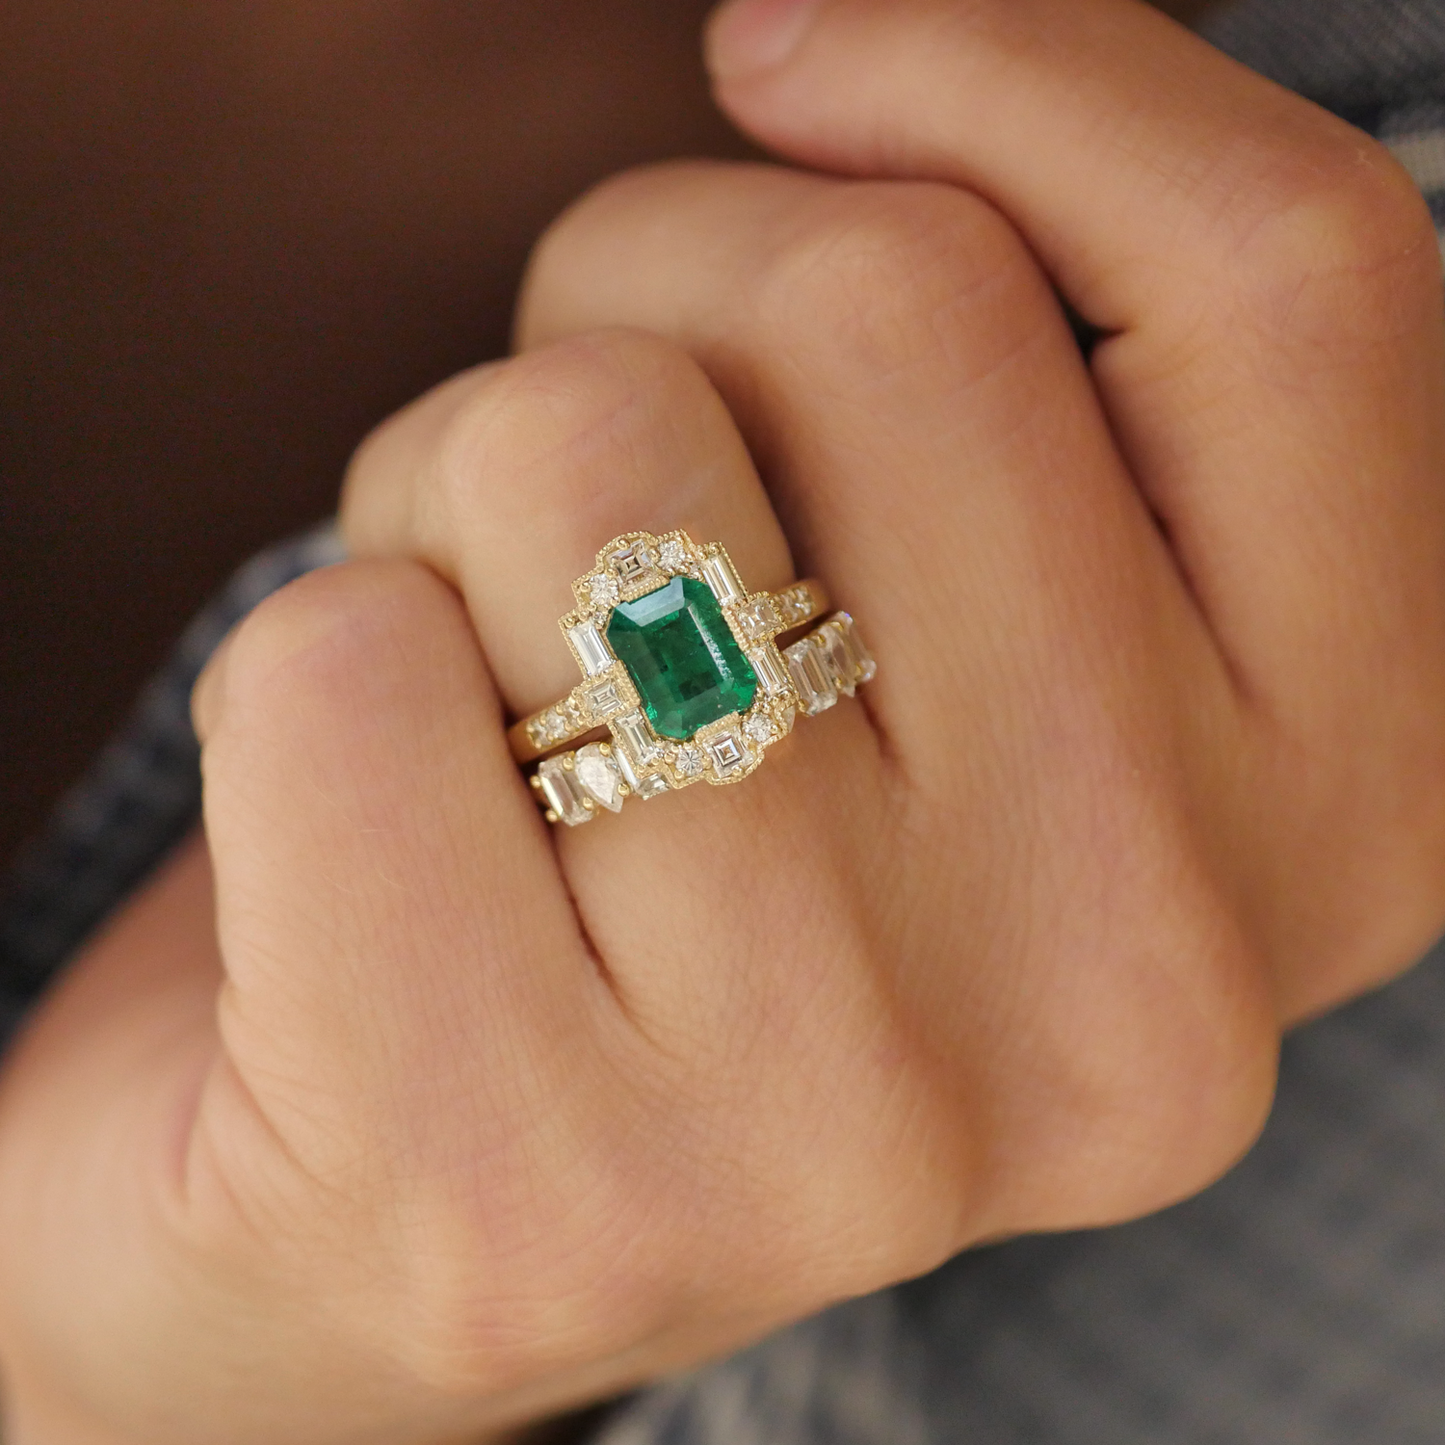 Emerald Deco Emerald Cut Diamond Mosaic Ring